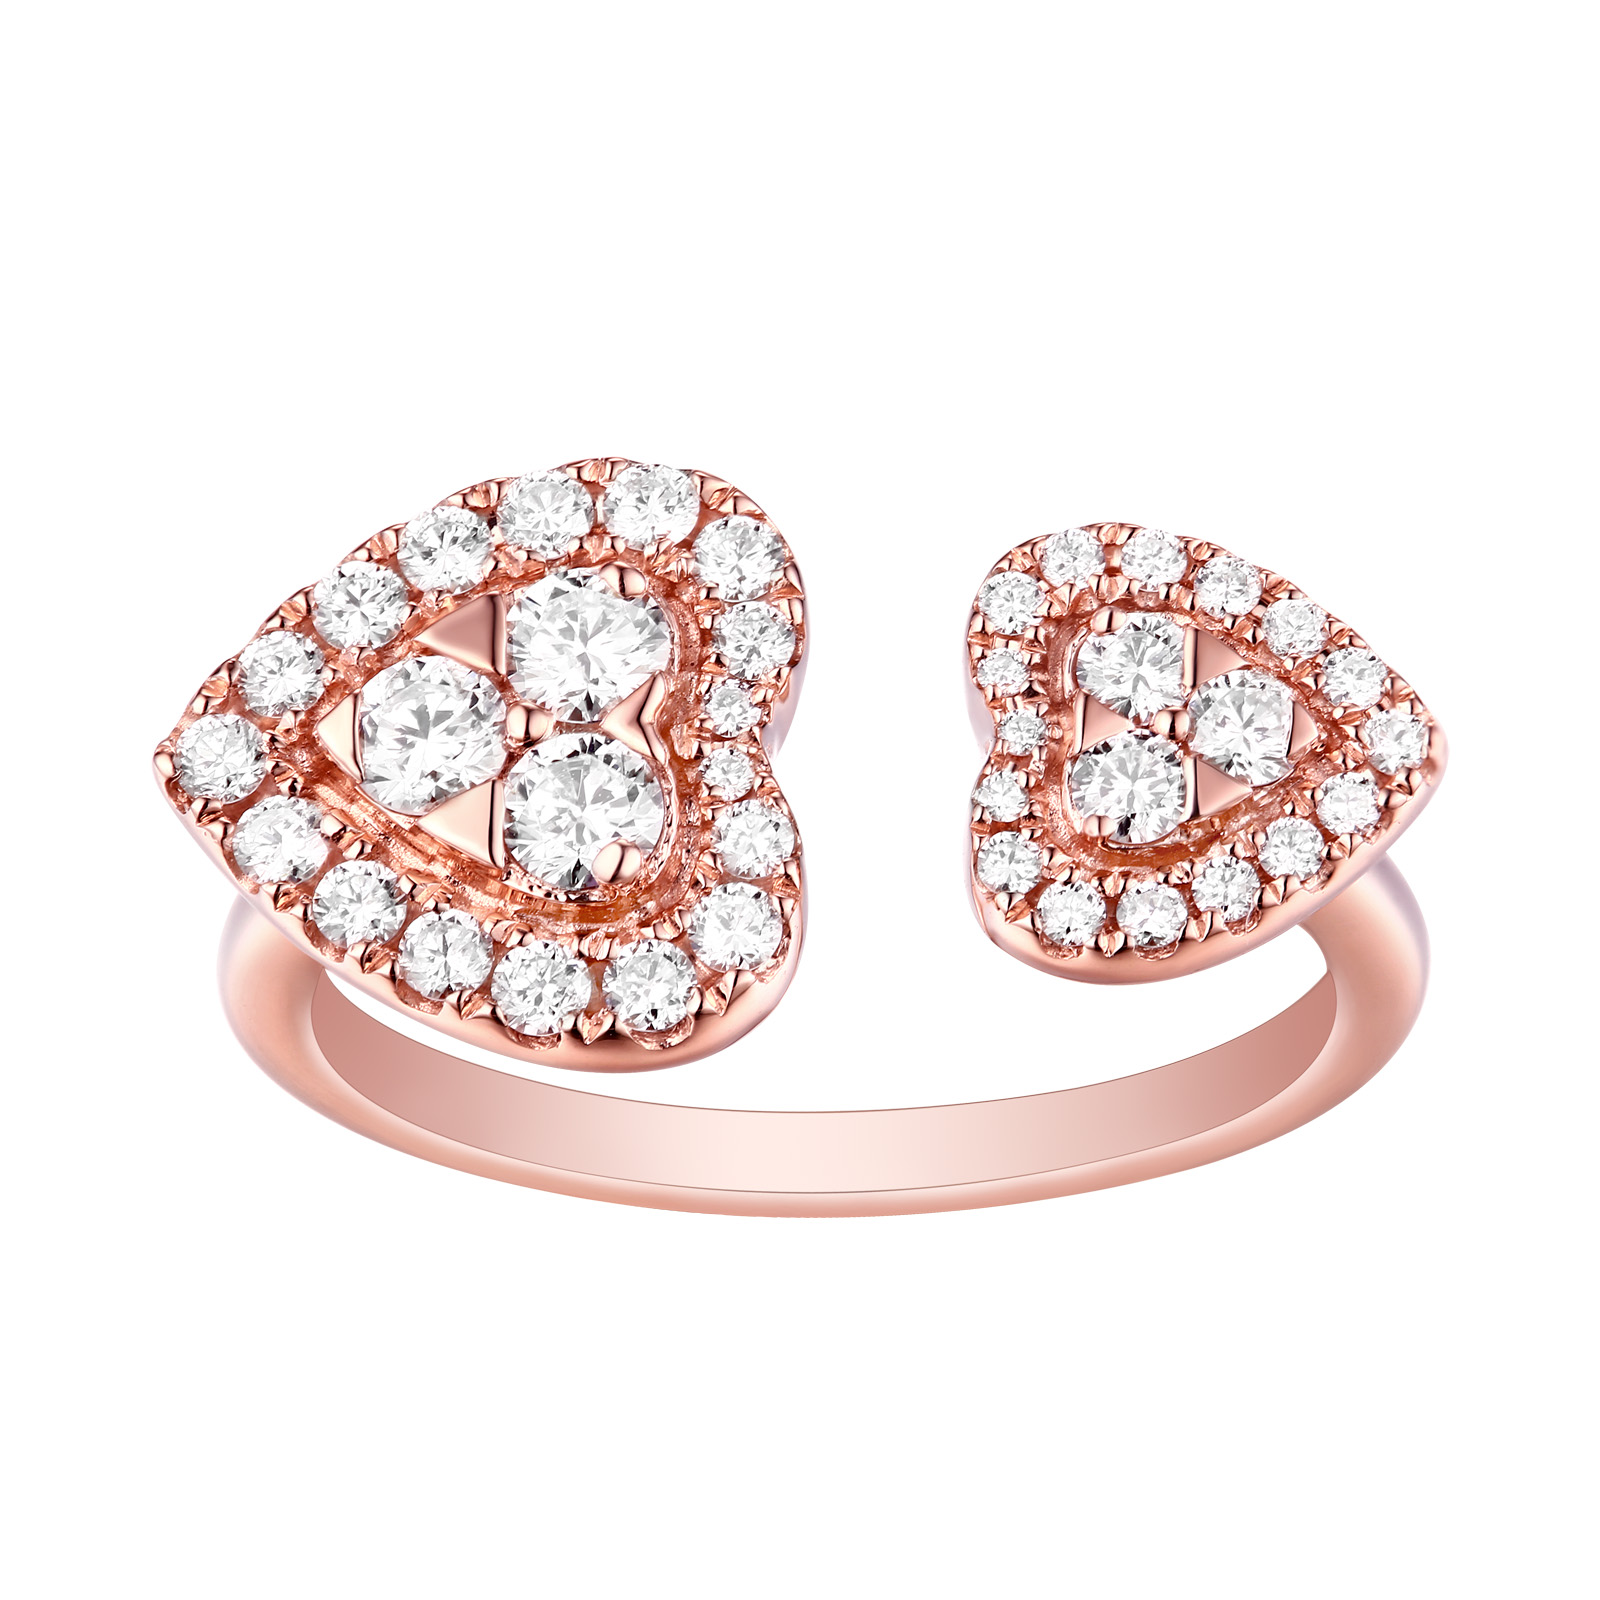 R25527WHT- 14K Rose Gold Diamond Ring, 0.72 TCW